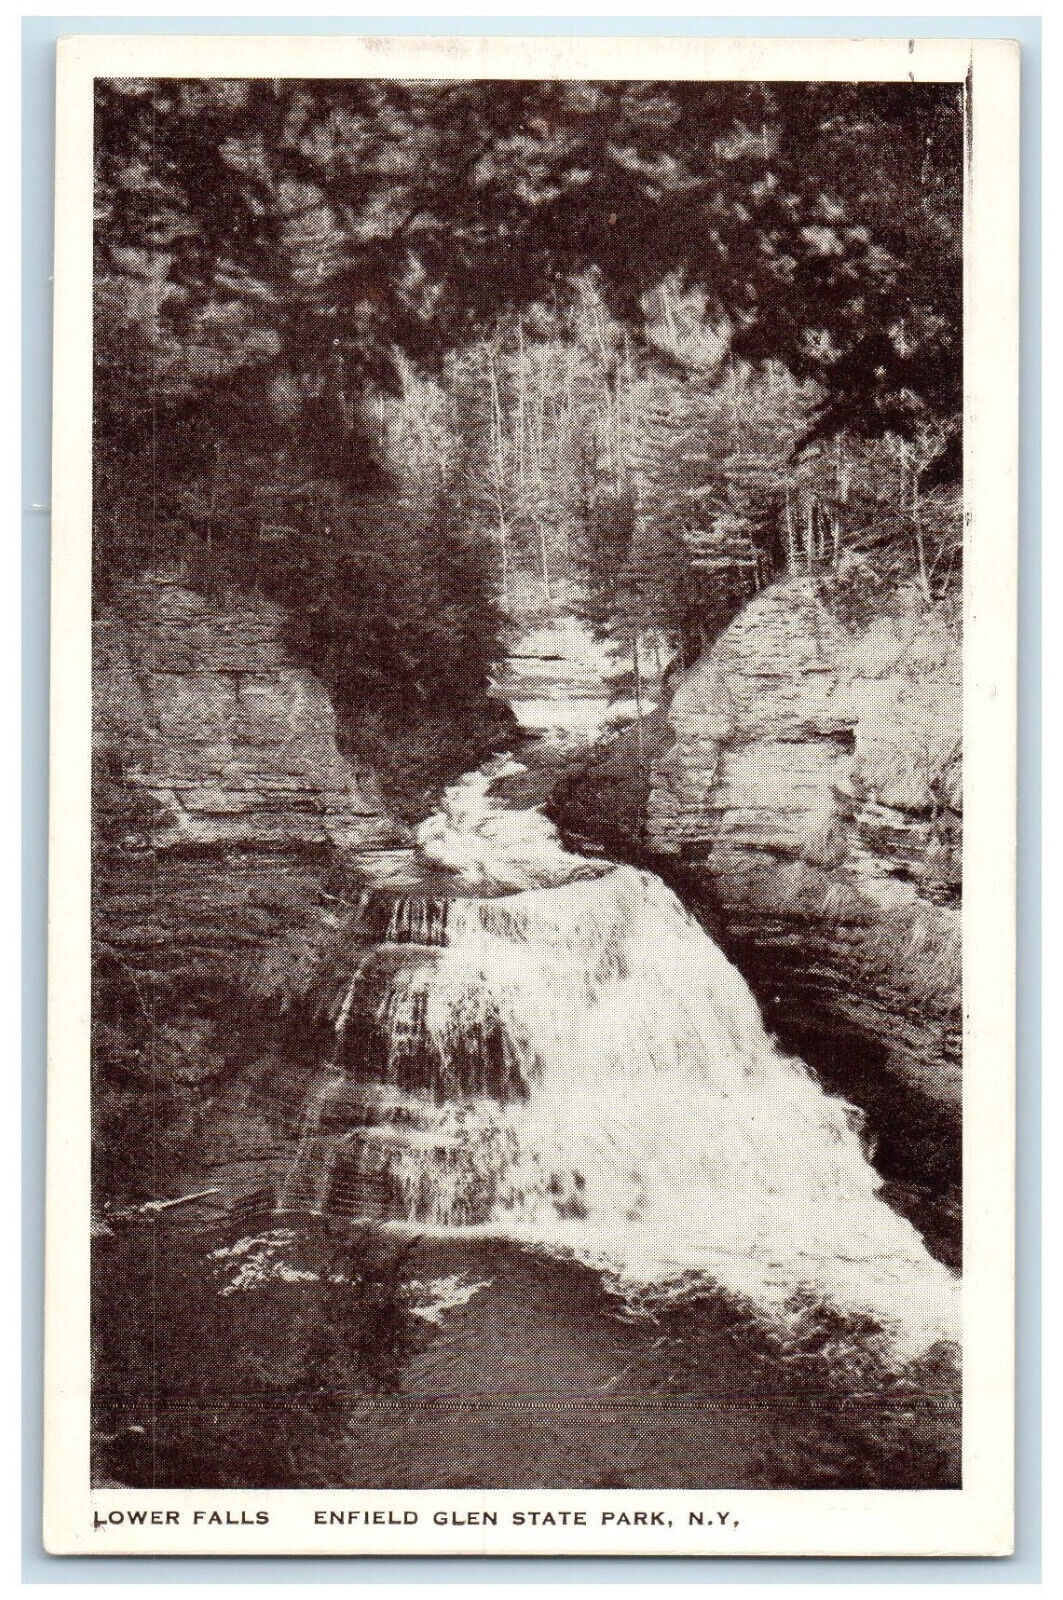 c1940's Lower Falls Enfield Glen State Park New York NY Vintage Postcard